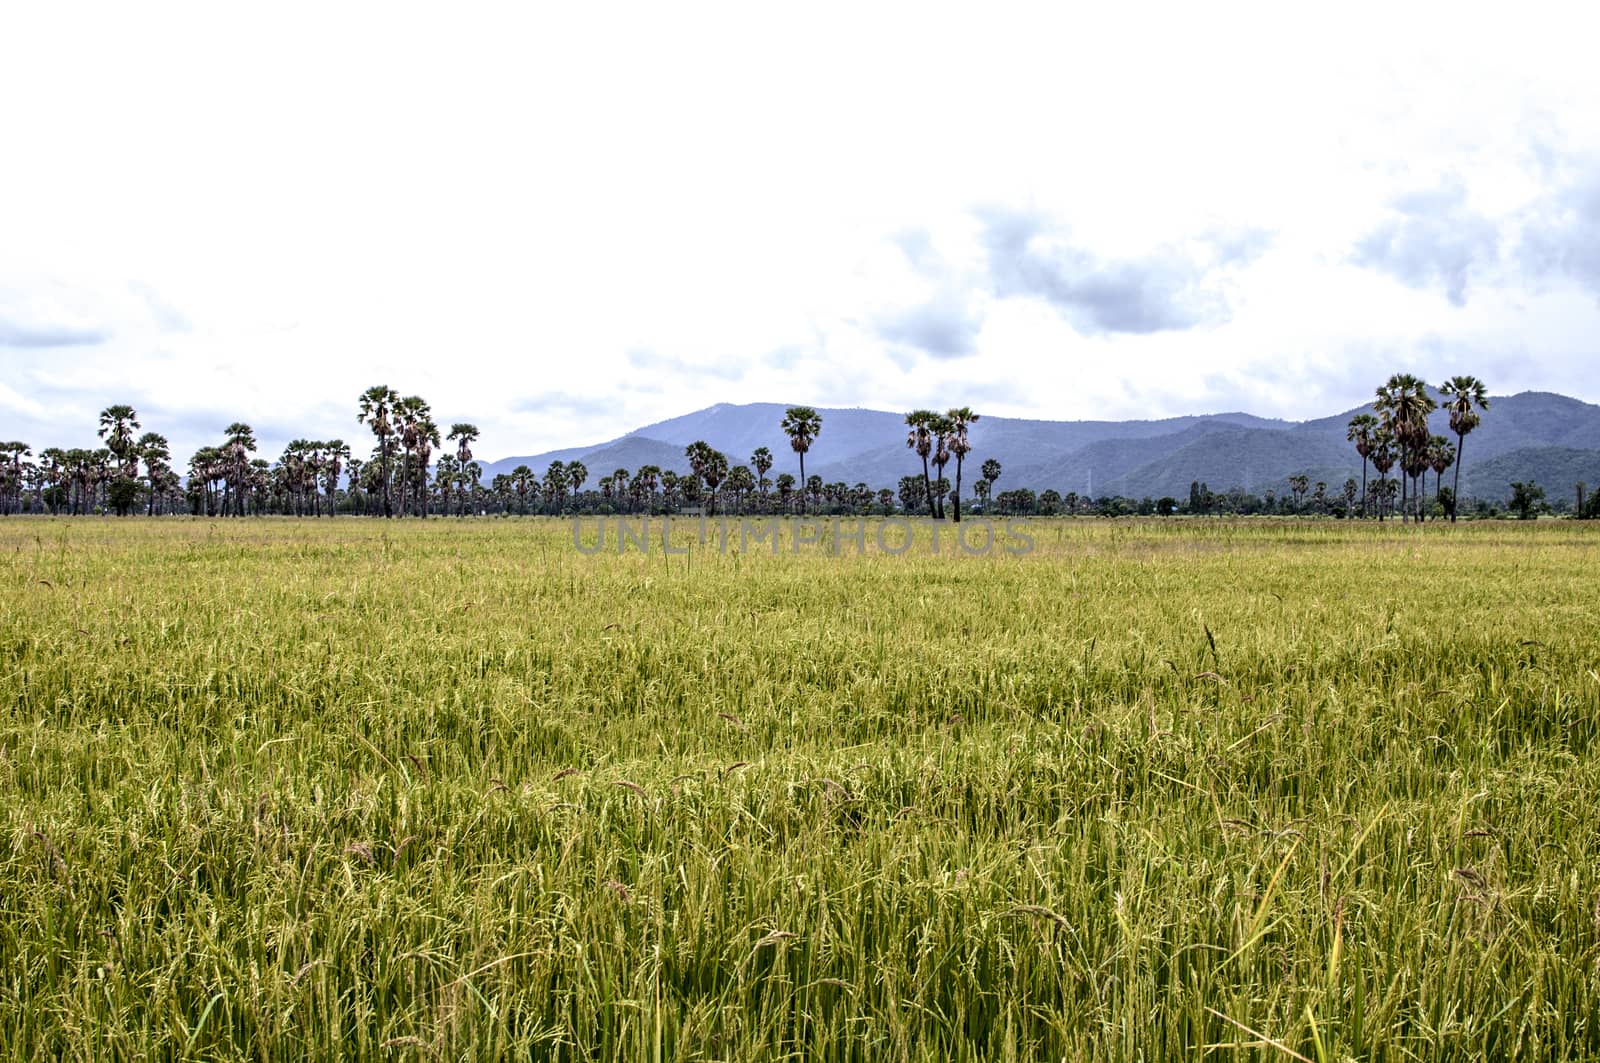 a rice field